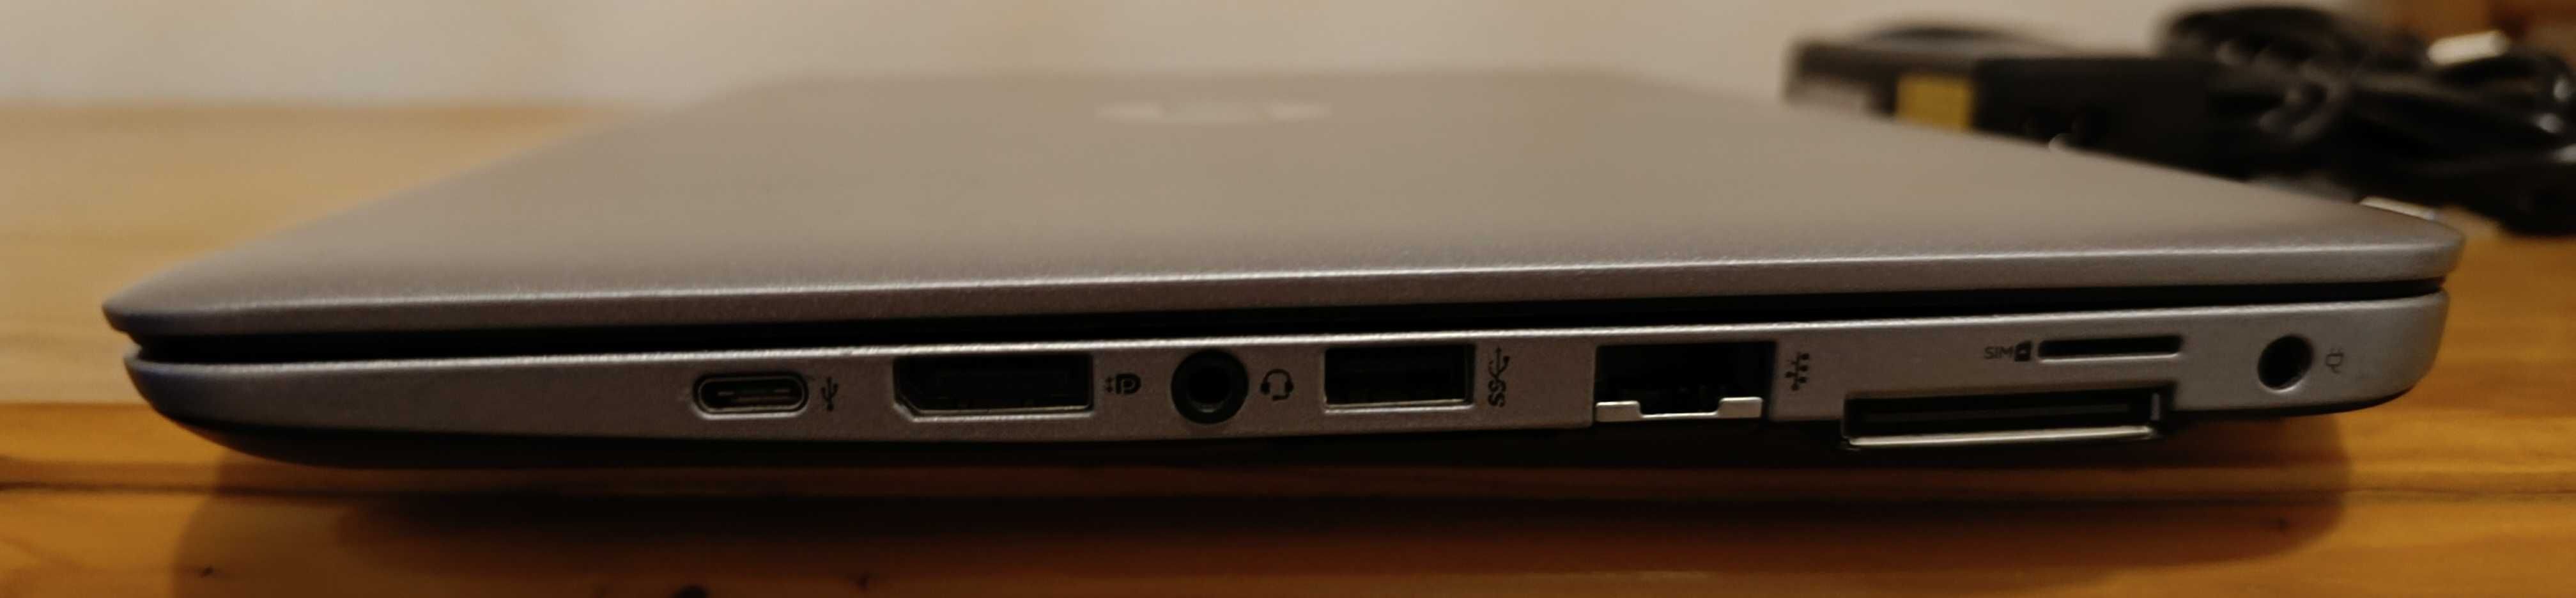 Portátil HP 820 G3 12,5" i5 SDD240Gb/8Gb